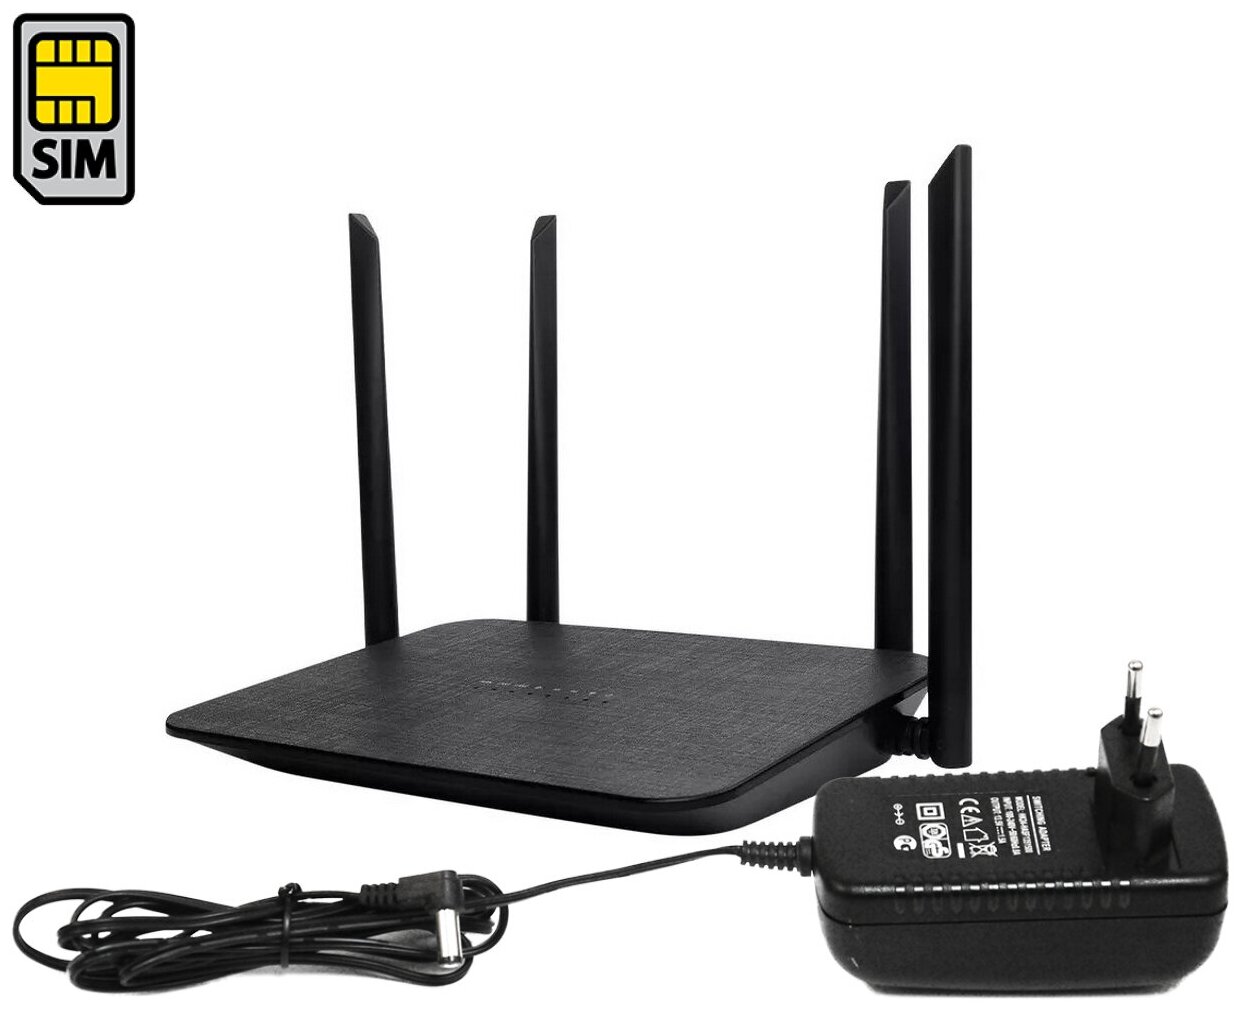 Wi-Fi роутеры 3G/4G с СИМ картой HDком С80-4G (Черный) (F1506EU) и 4G-lte модемом - Wi-Fi 3G/4G/LTE маршрутизатор. Модемы 4g для интернета